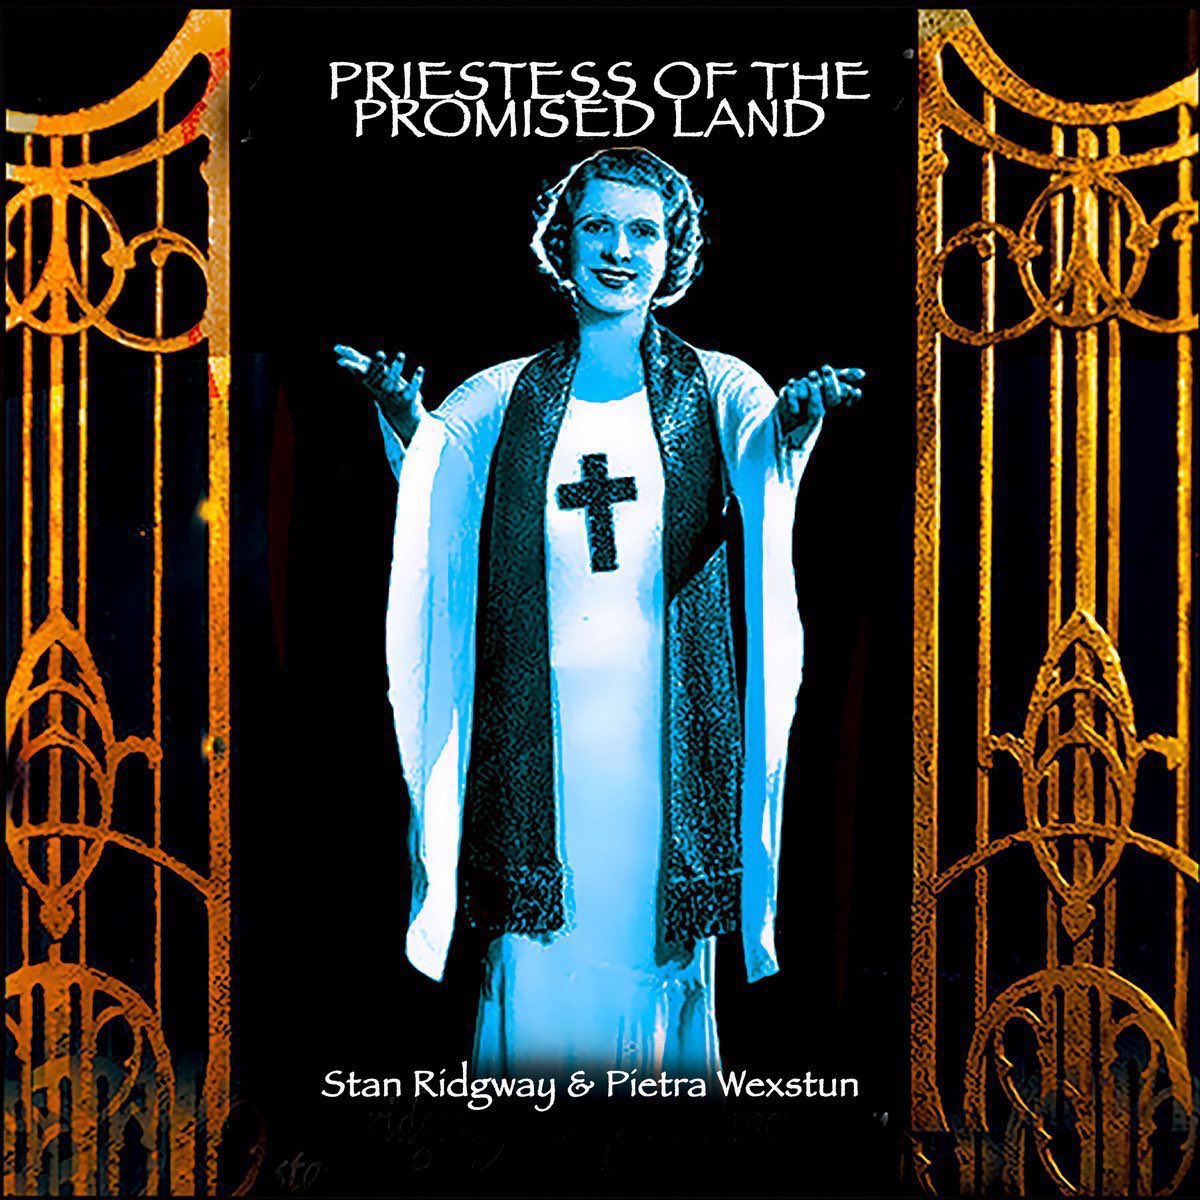 Stan Ridgway & Pietra Wexstun 'Priestess Of The Promised Land' album now on Bandcamp. bit.ly/3eFwfRi '..mysterious stories from an ancient L.A., Modern 21st century folk music ' #stanridgway #dtla #pietrawexstun #Filmsongs #soundtrack #wallofvoodoo